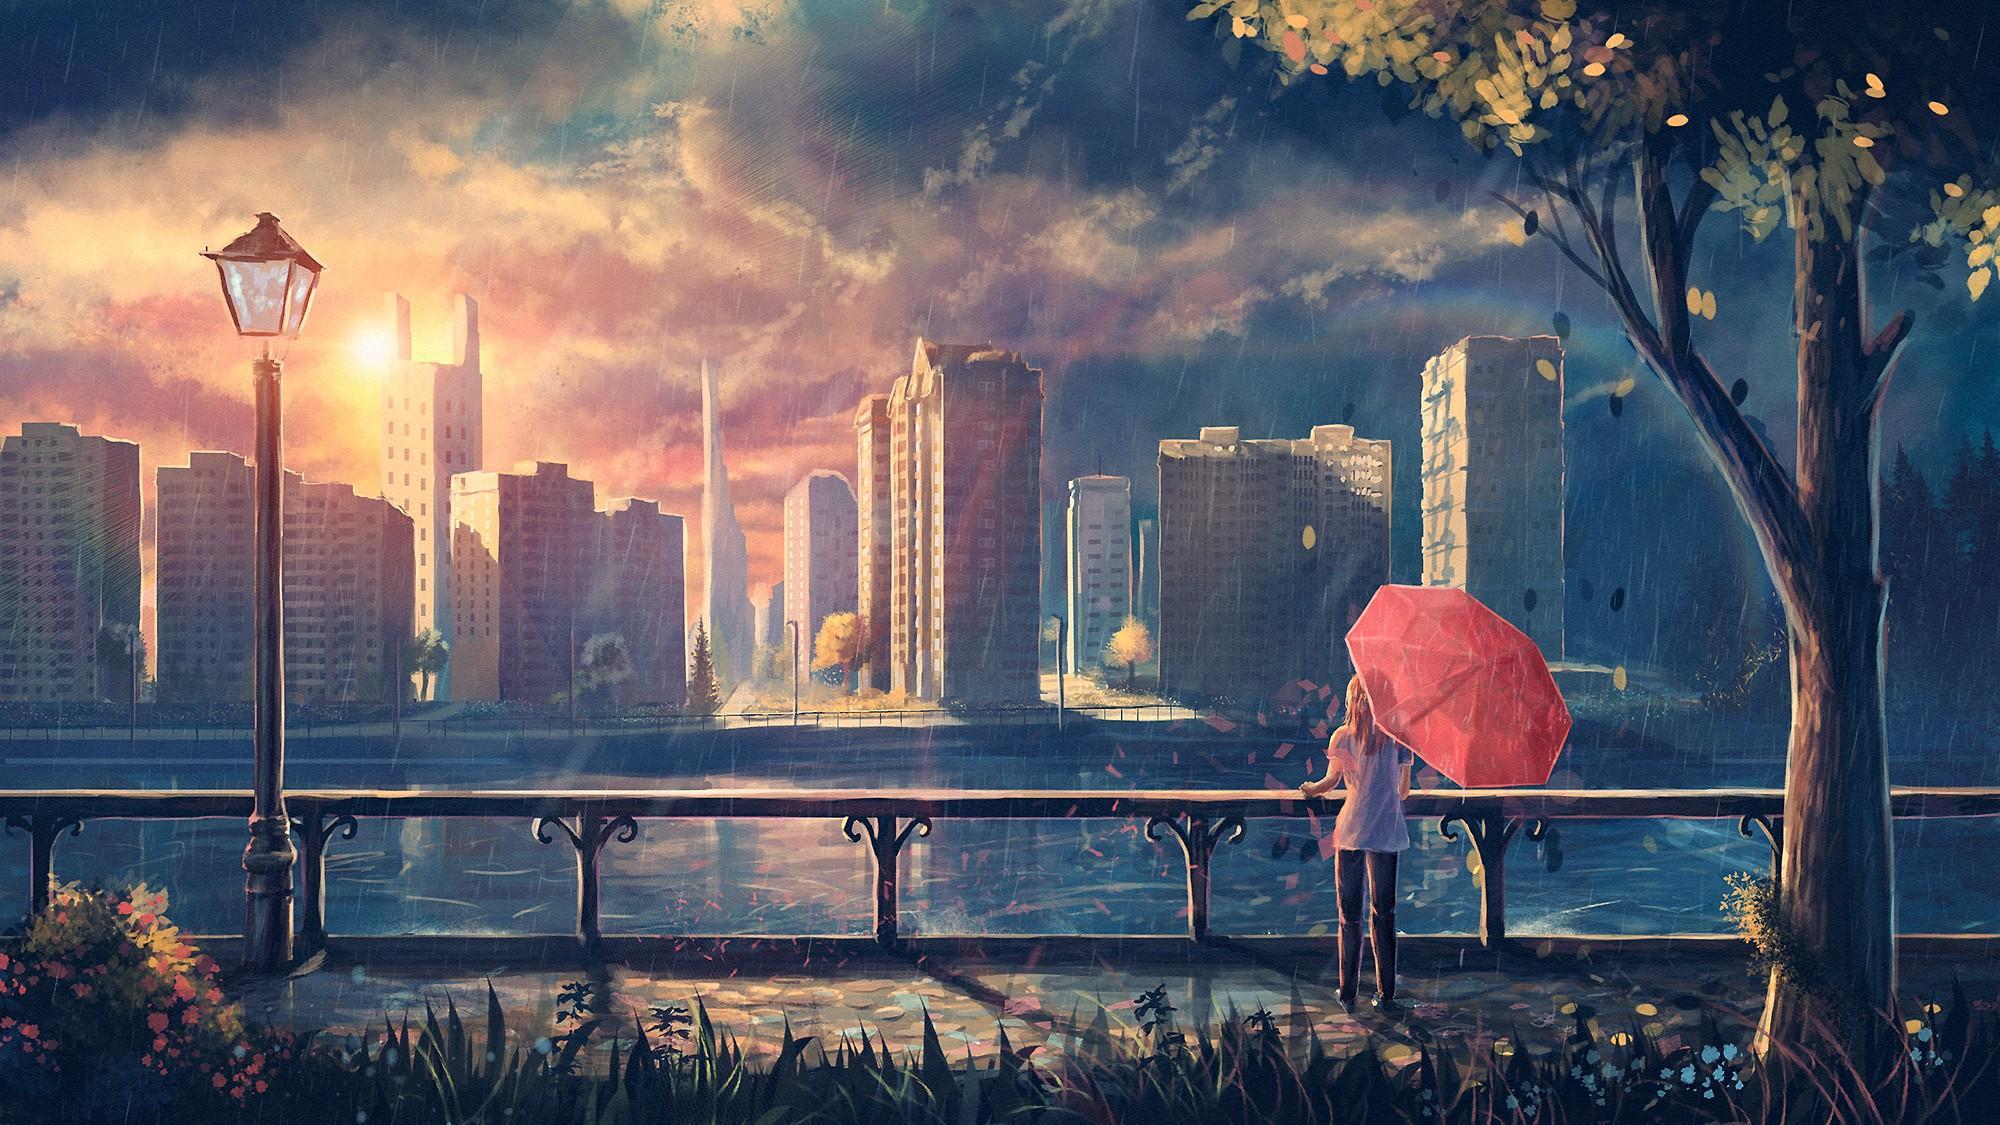 Anime Raining Sky Background Your Animeanimation Stock Illustration  1677019663 | Shutterstock